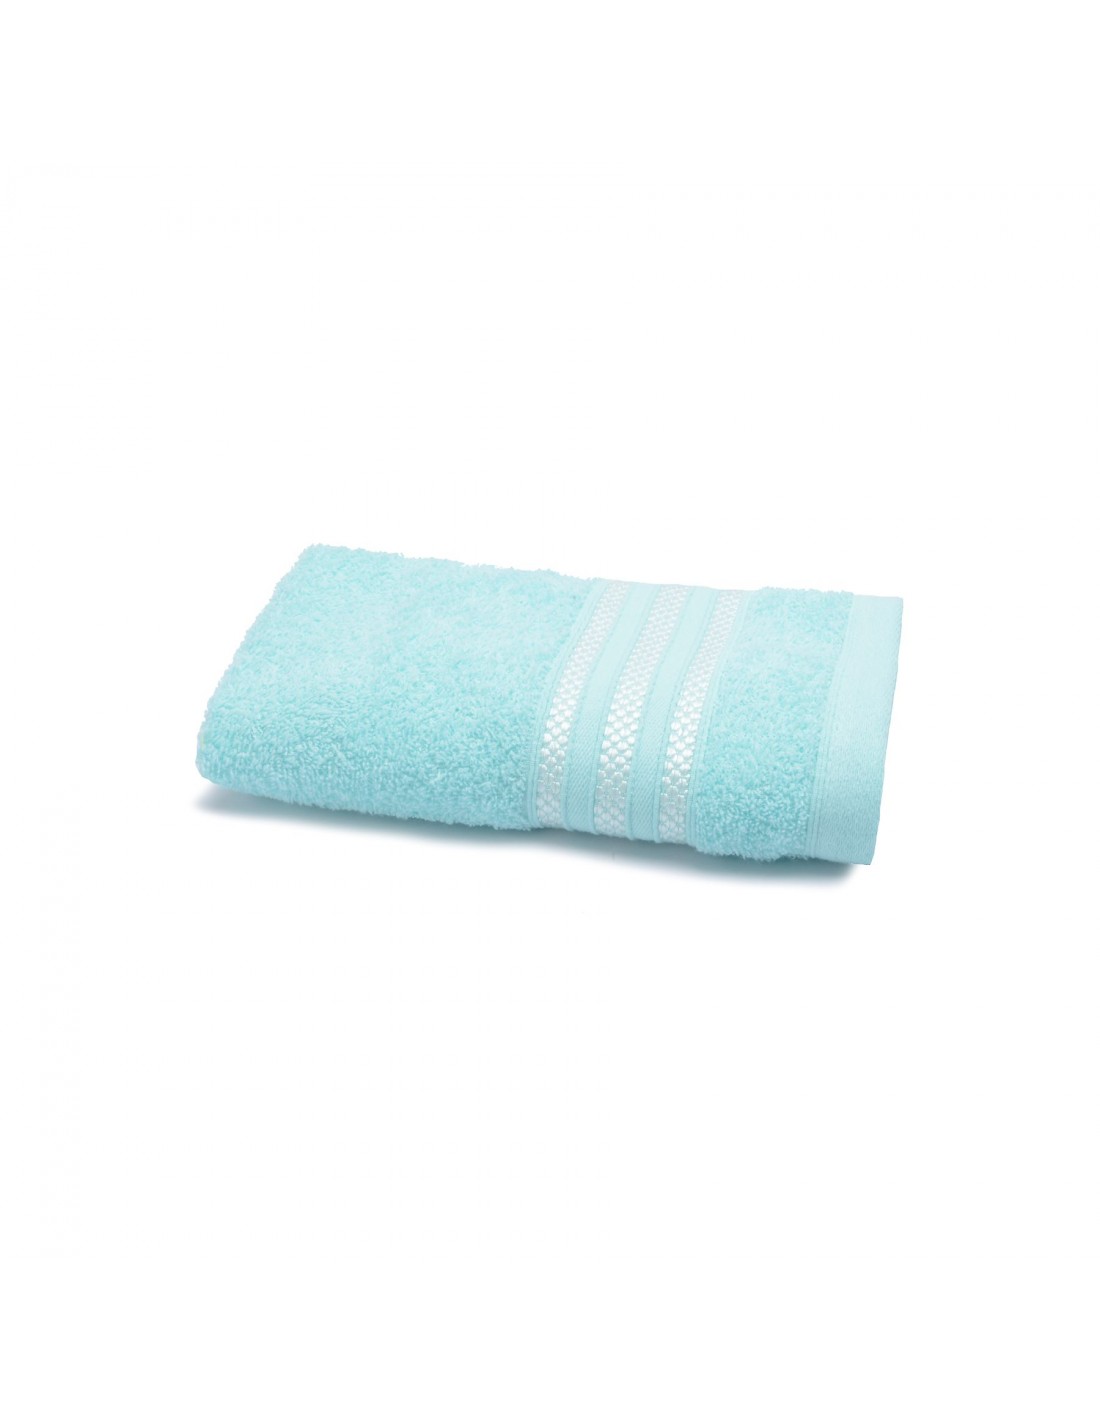 Juego de toallas Aguamarina - Tienda Lartextil